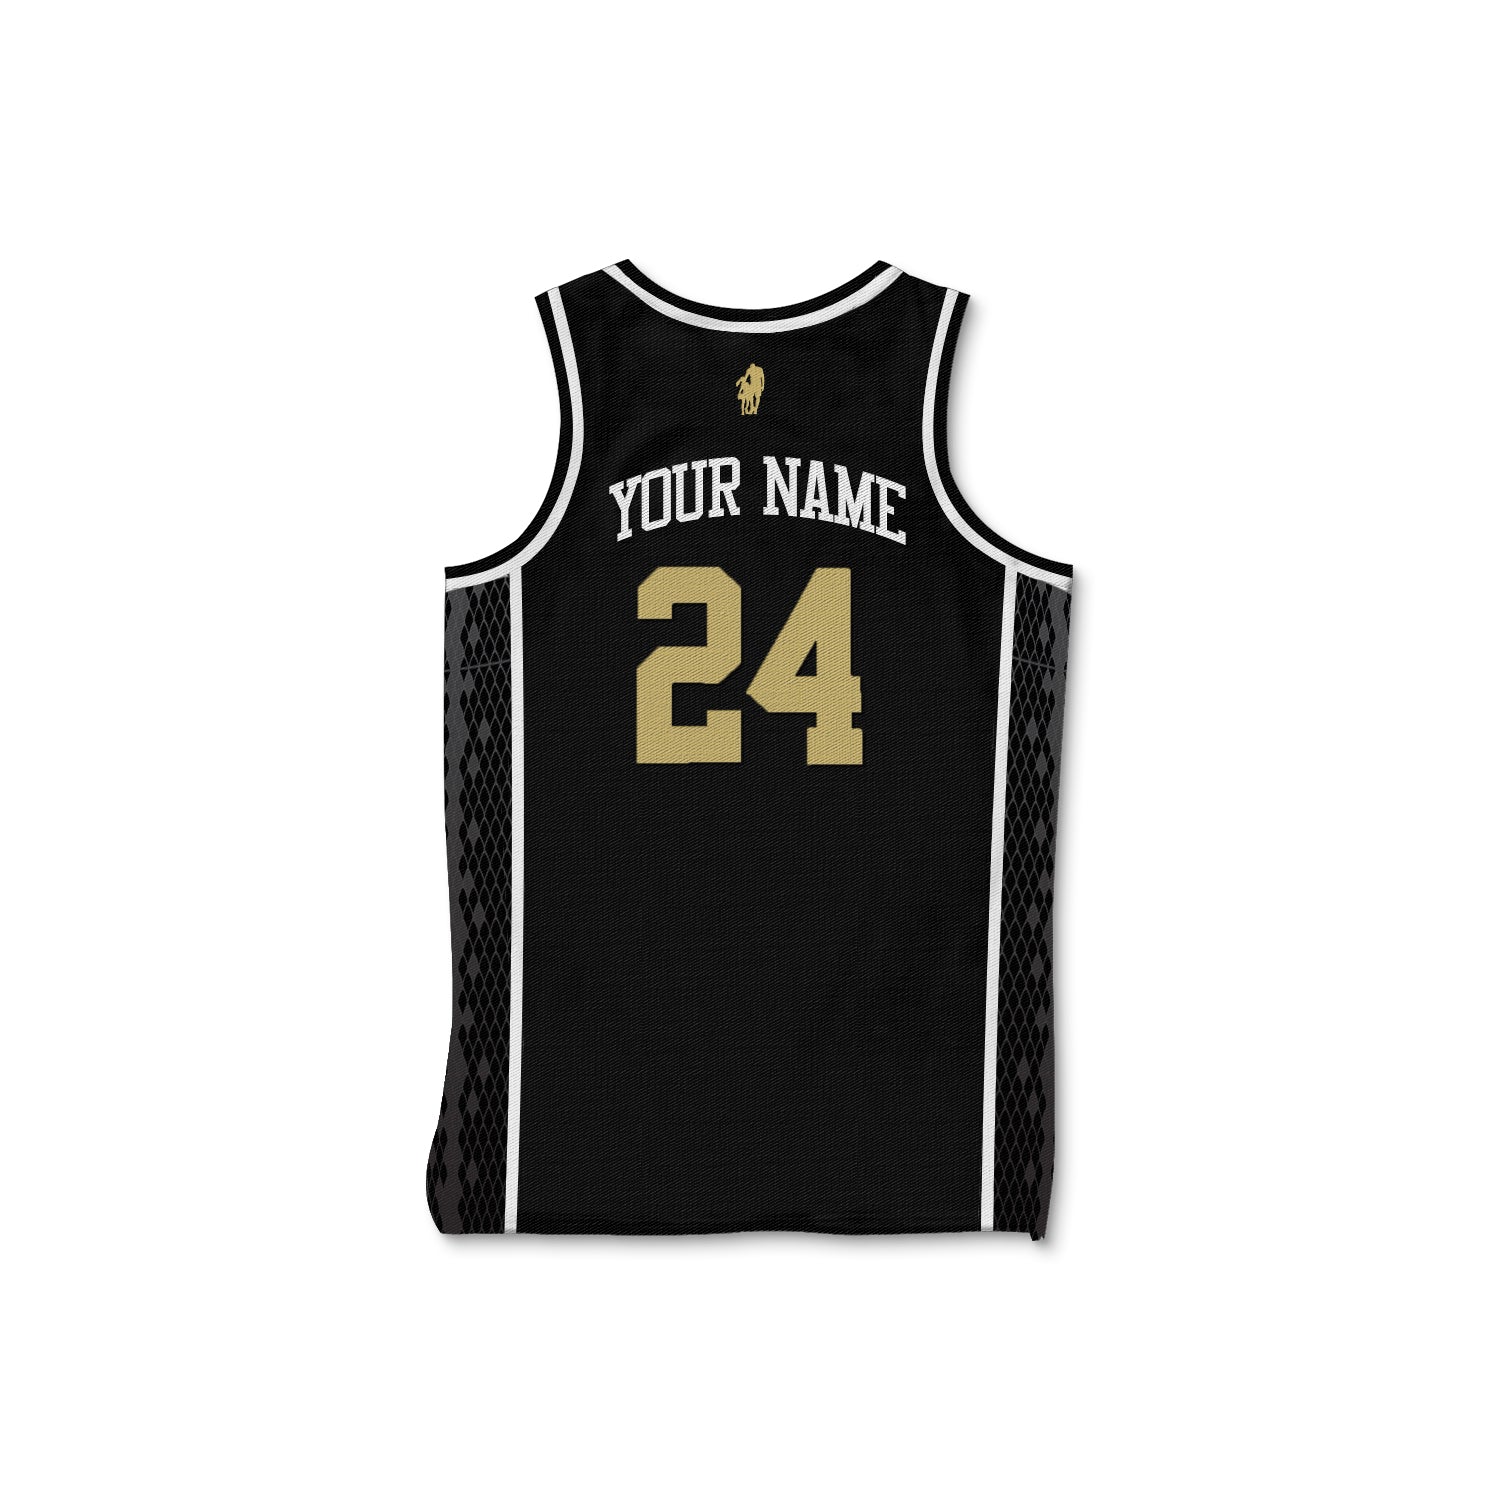 Basketball Jersey for Men Sleeveless Mesh Customize Name Number